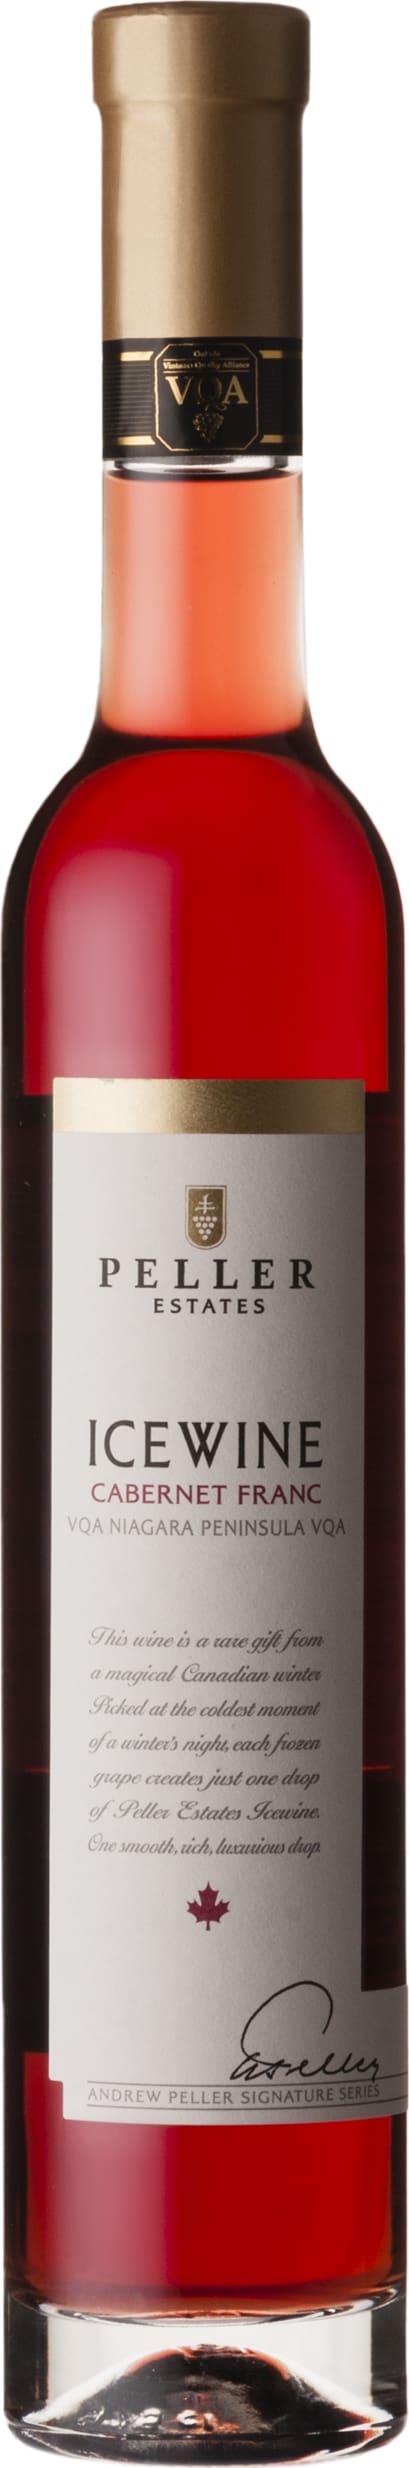 Peller Family Estates Cabernet Franc Icewine 375cl 2019 37.5cl - Buy Peller Family Estates Wines from GREAT WINES DIRECT wine shop